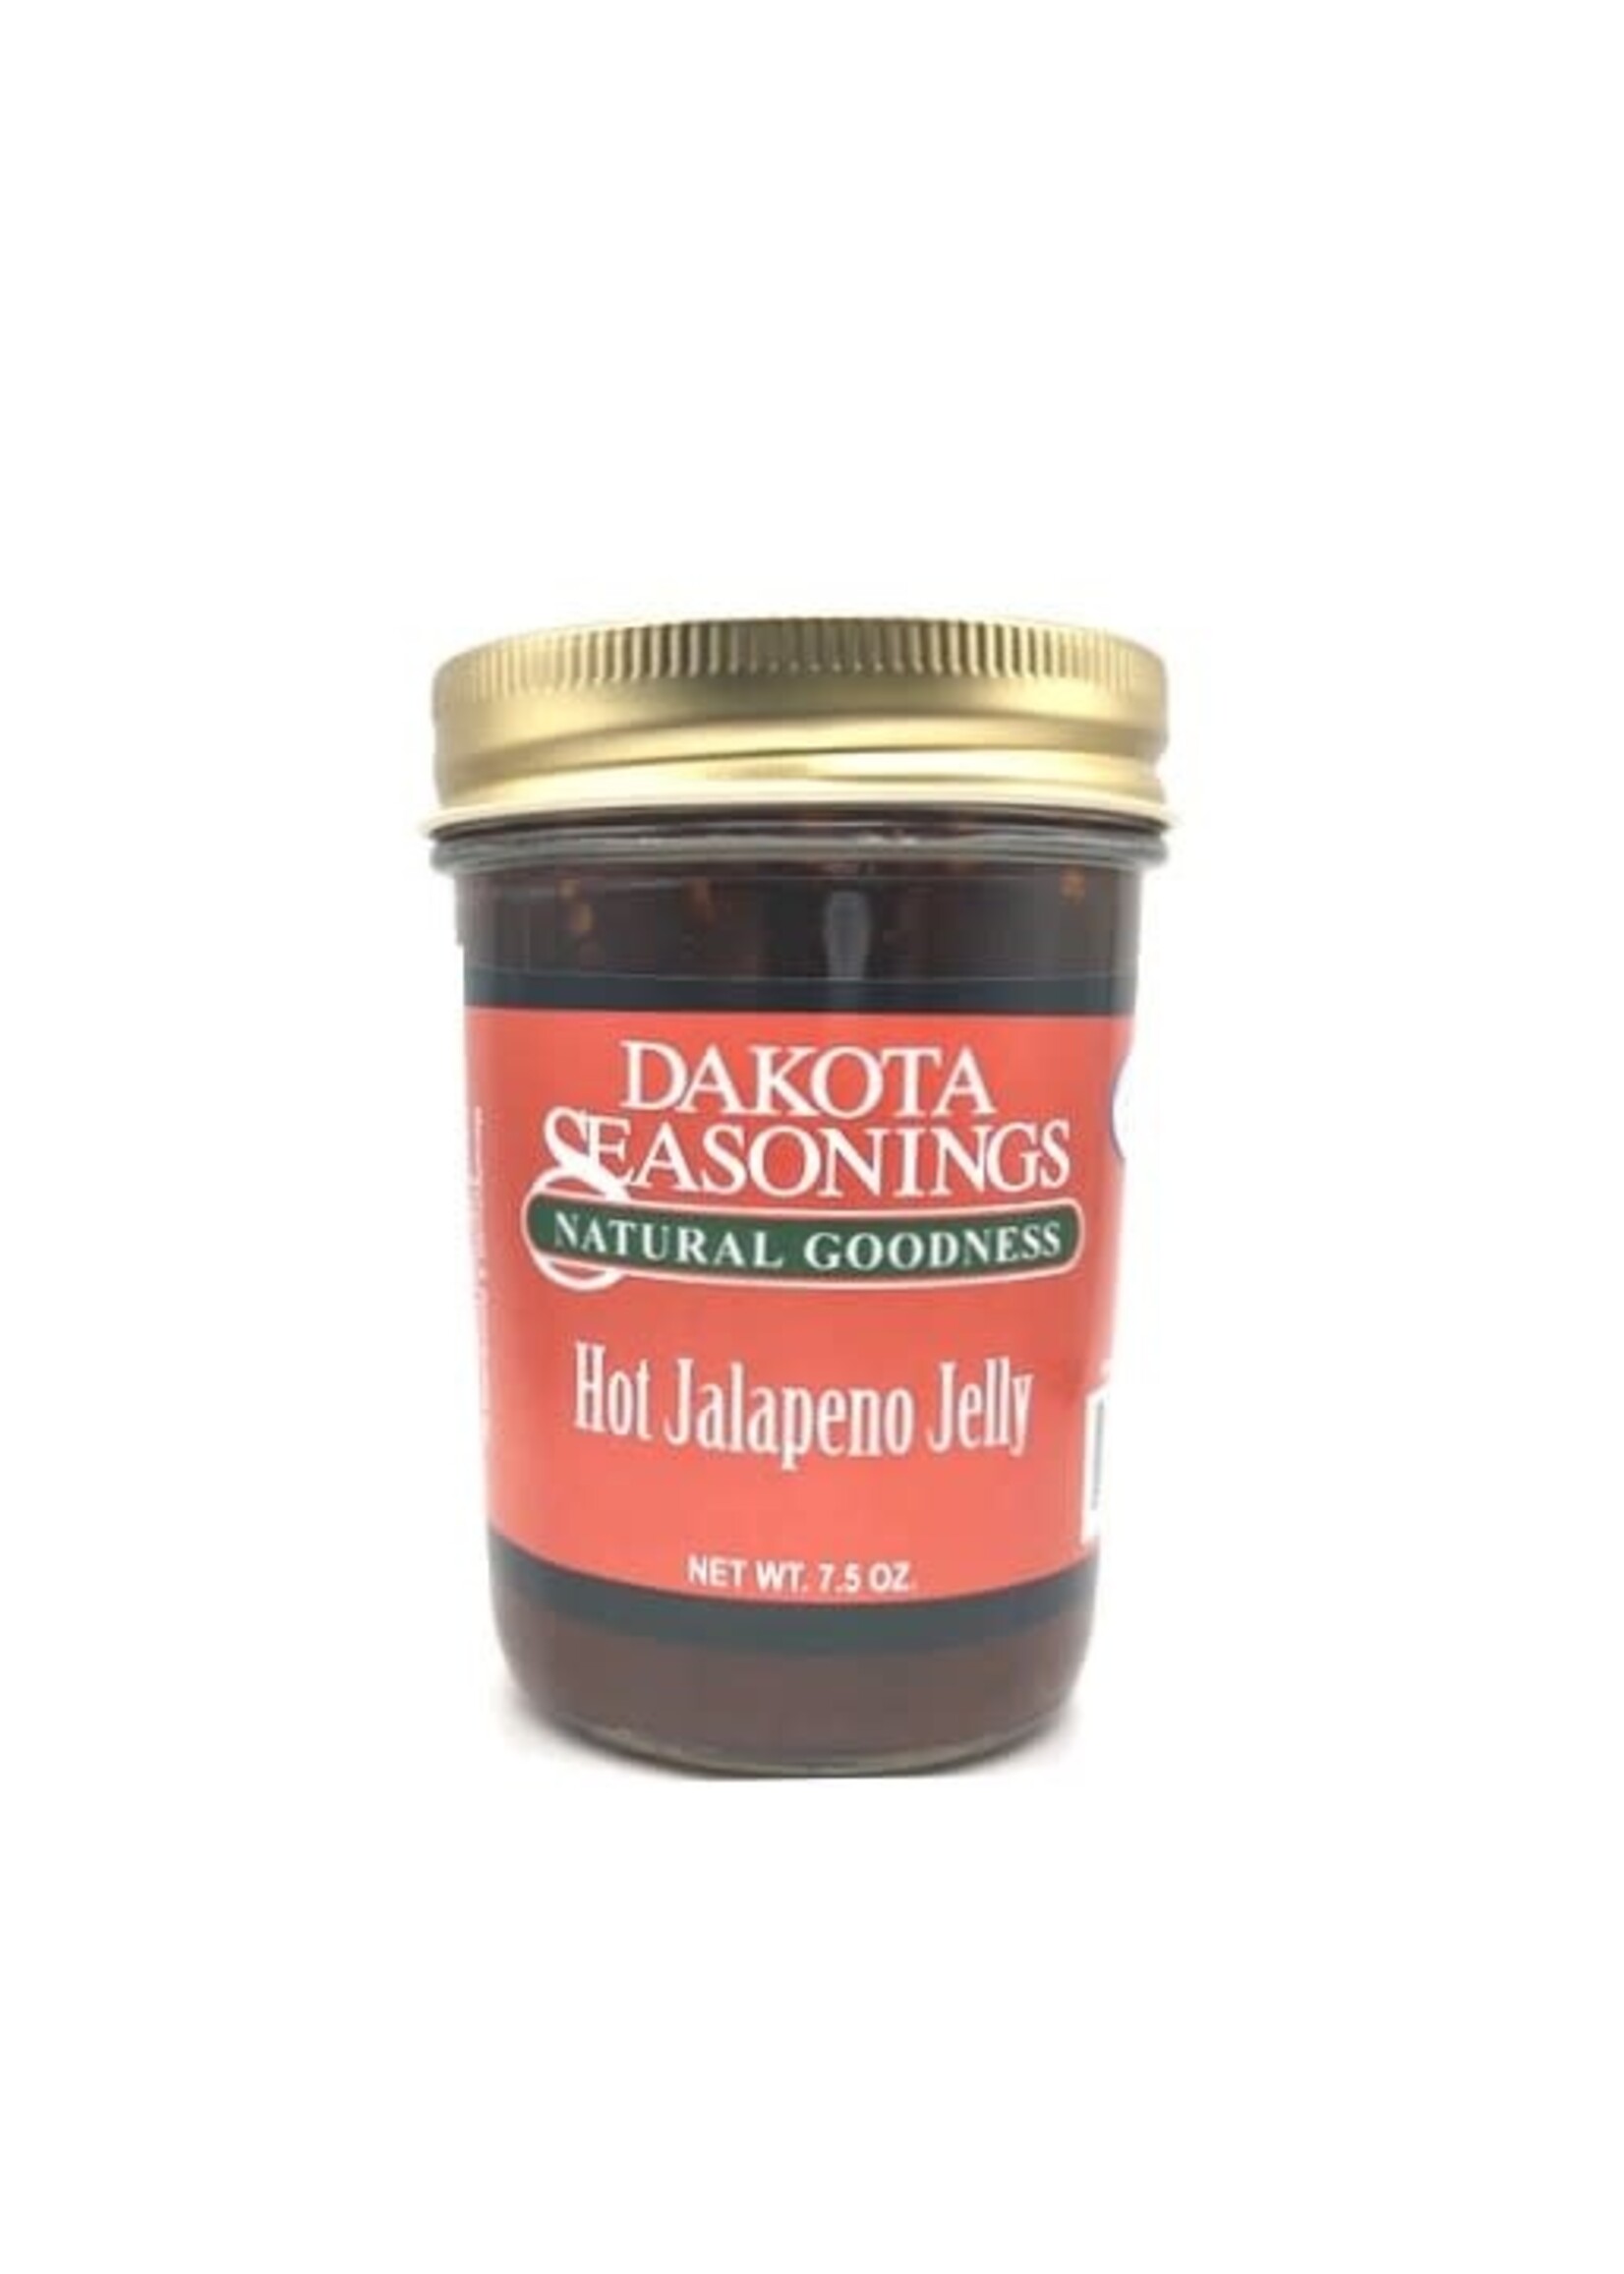 Dakota Seasonings Hot Jalapeno Jelly 7.5oz